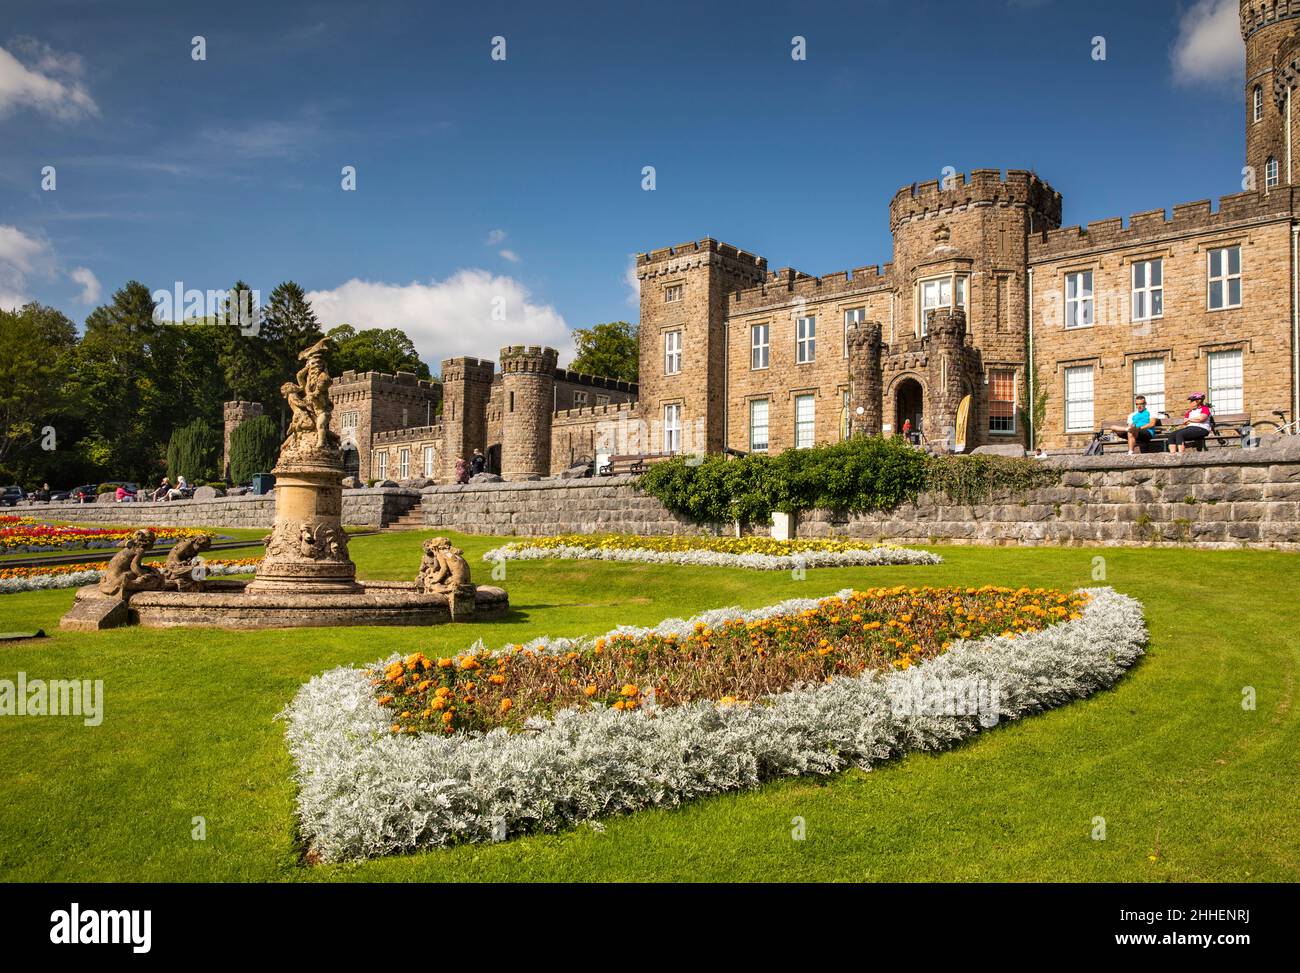 UK, Wales, Merthyr Tydfil, Cyfartha Castle Park, colourful flower beds at castle entrance Stock Photo